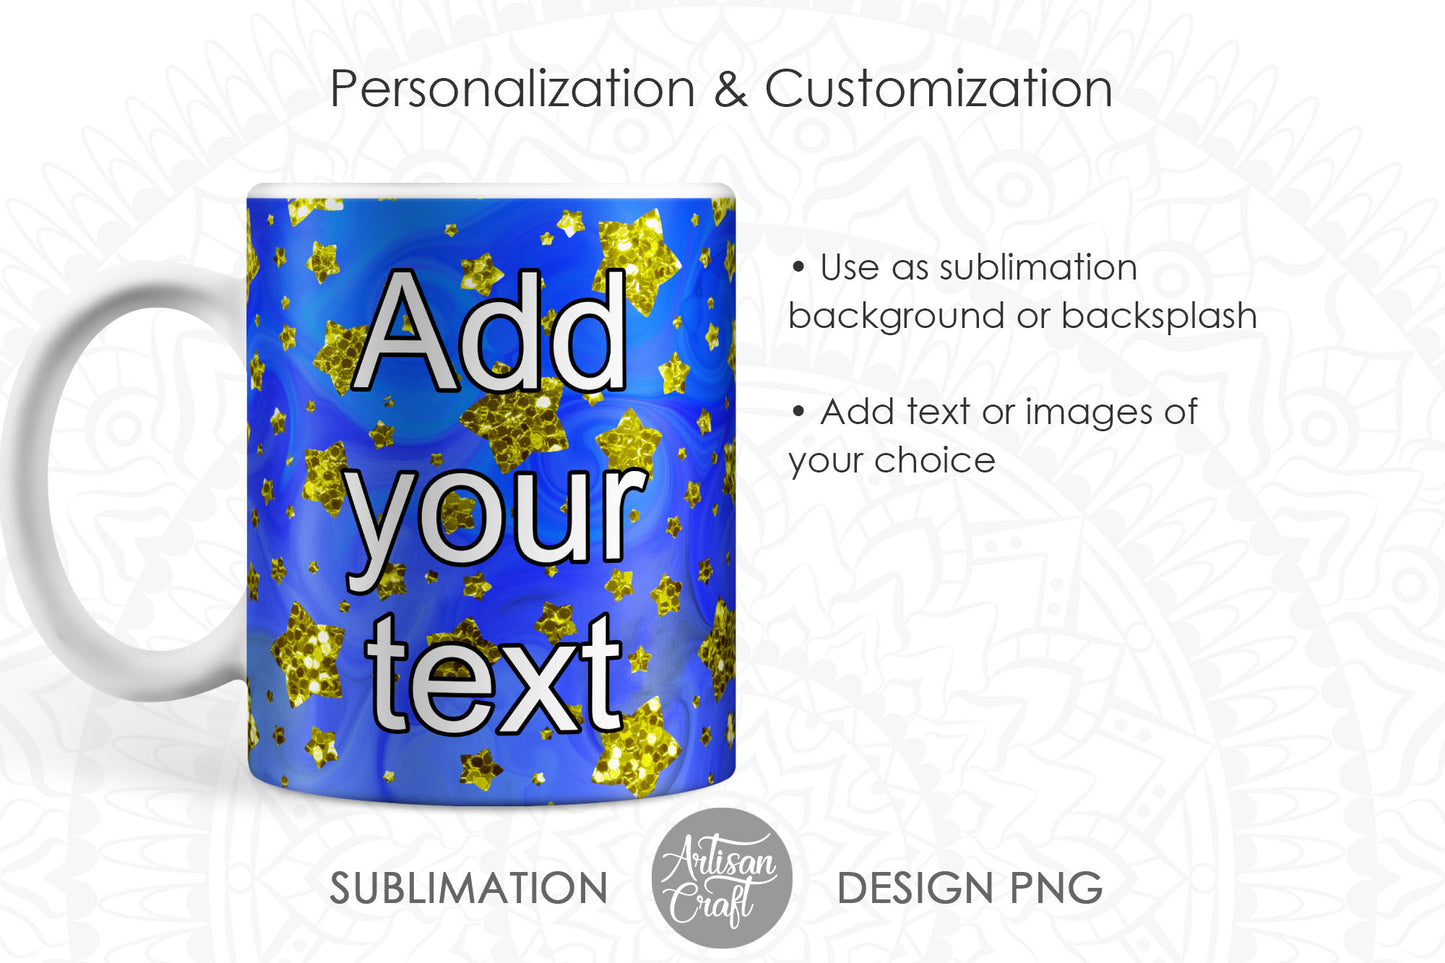 Star mug sublimation designs